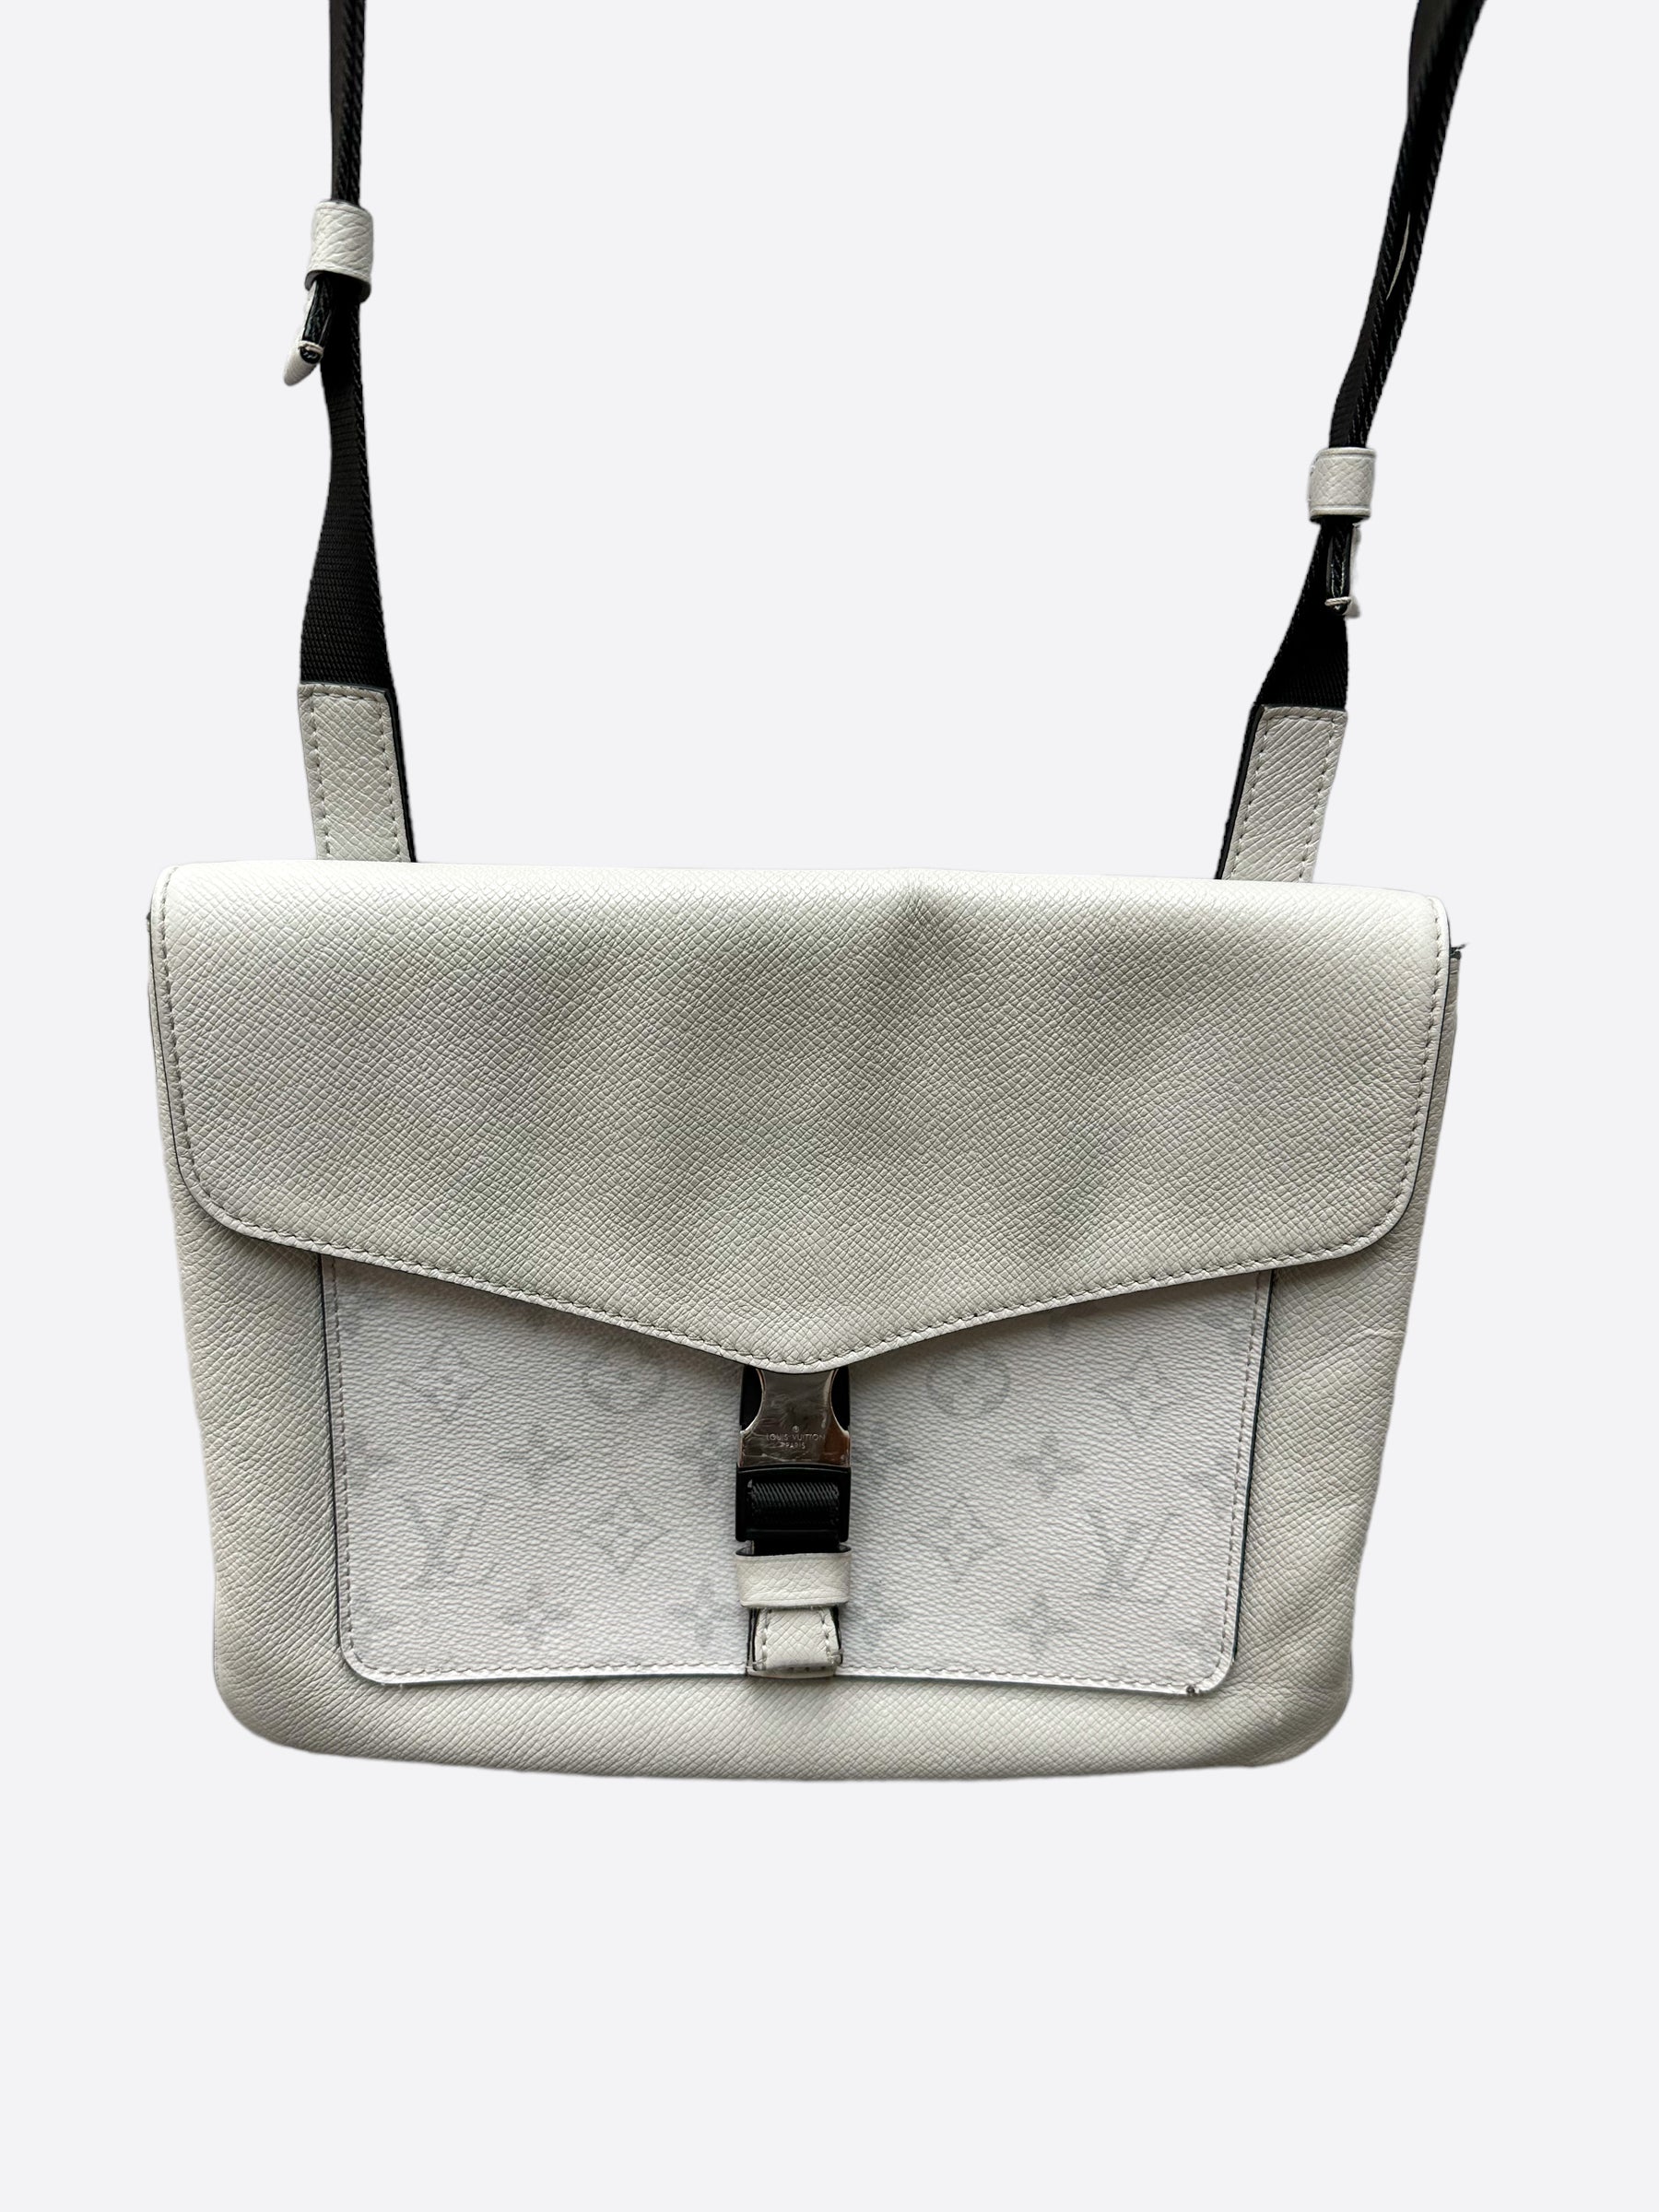 Louis Vuitton Outdoor Backpack Monogram Taigarama